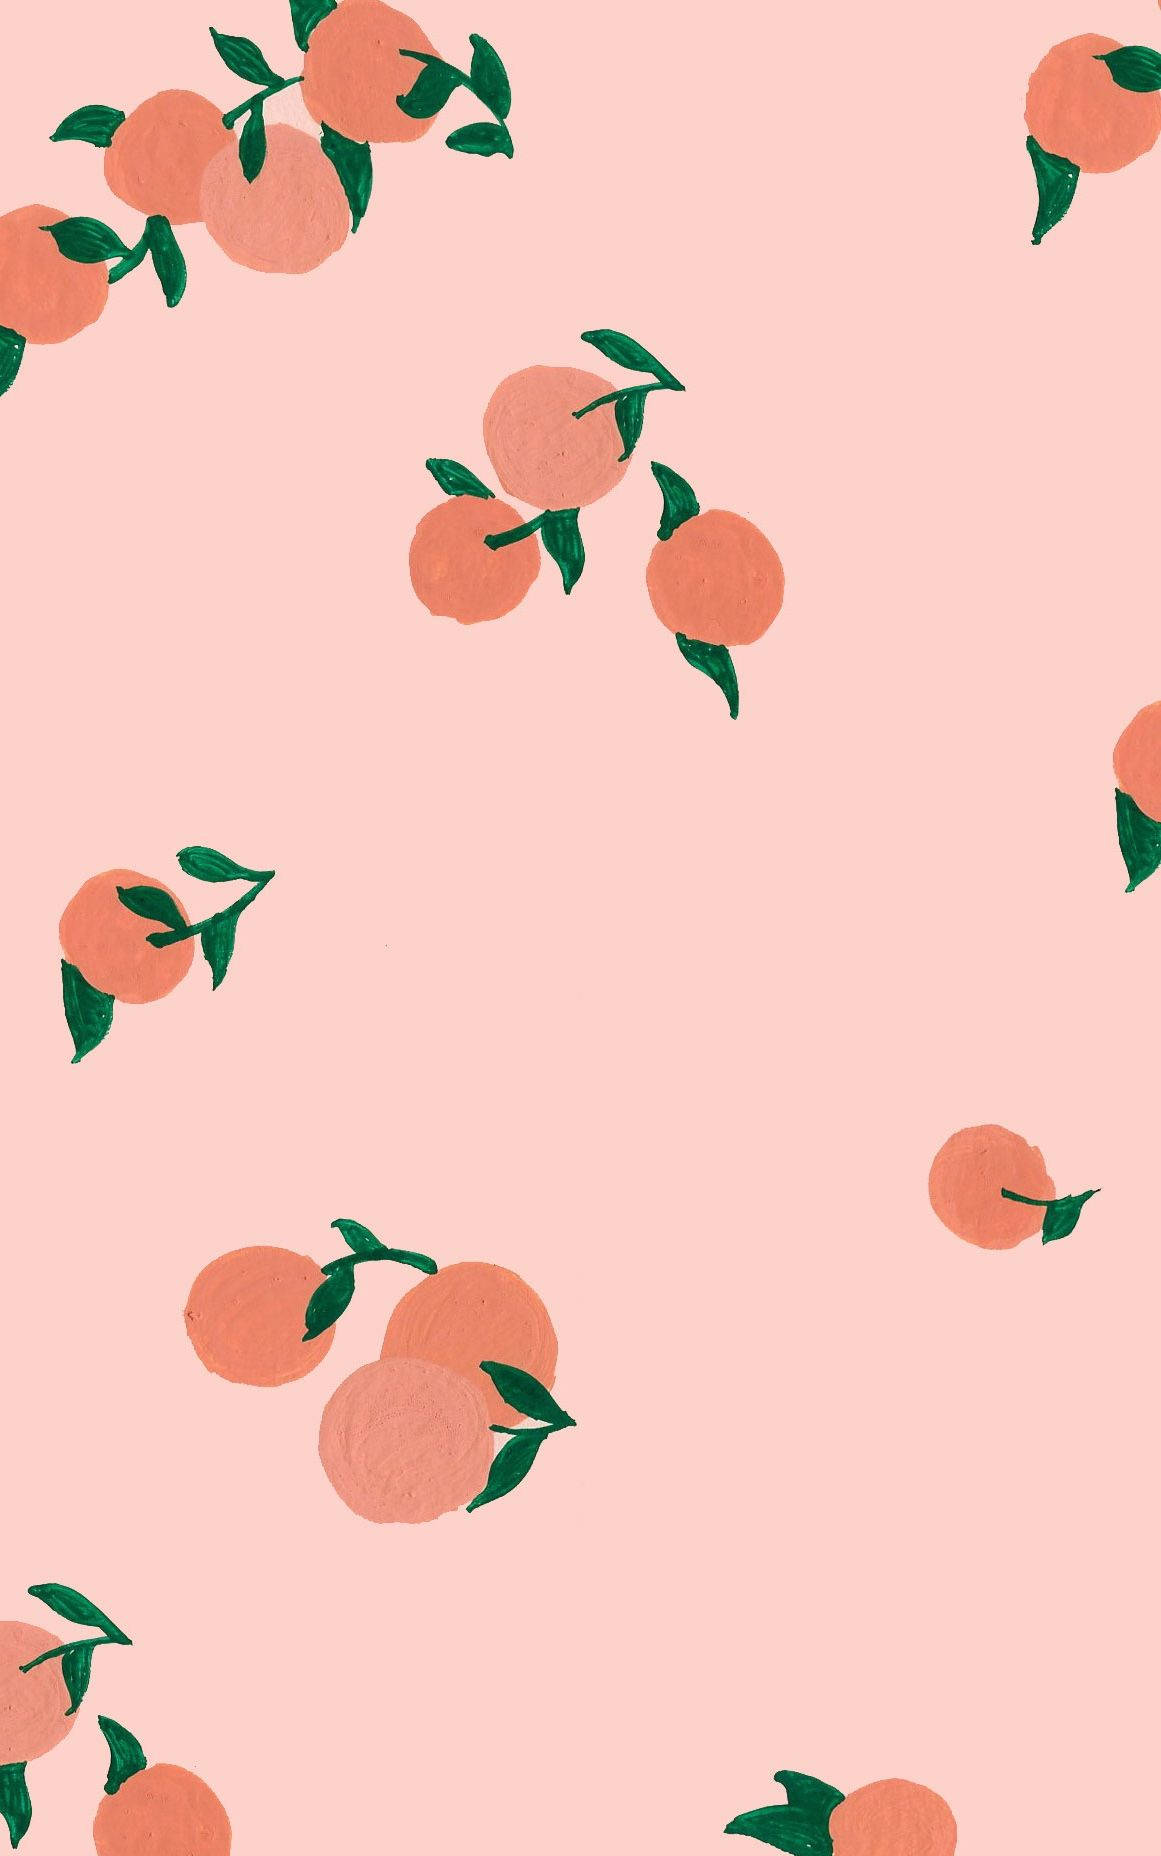 Peach Fruit Digital Art Wallpaper